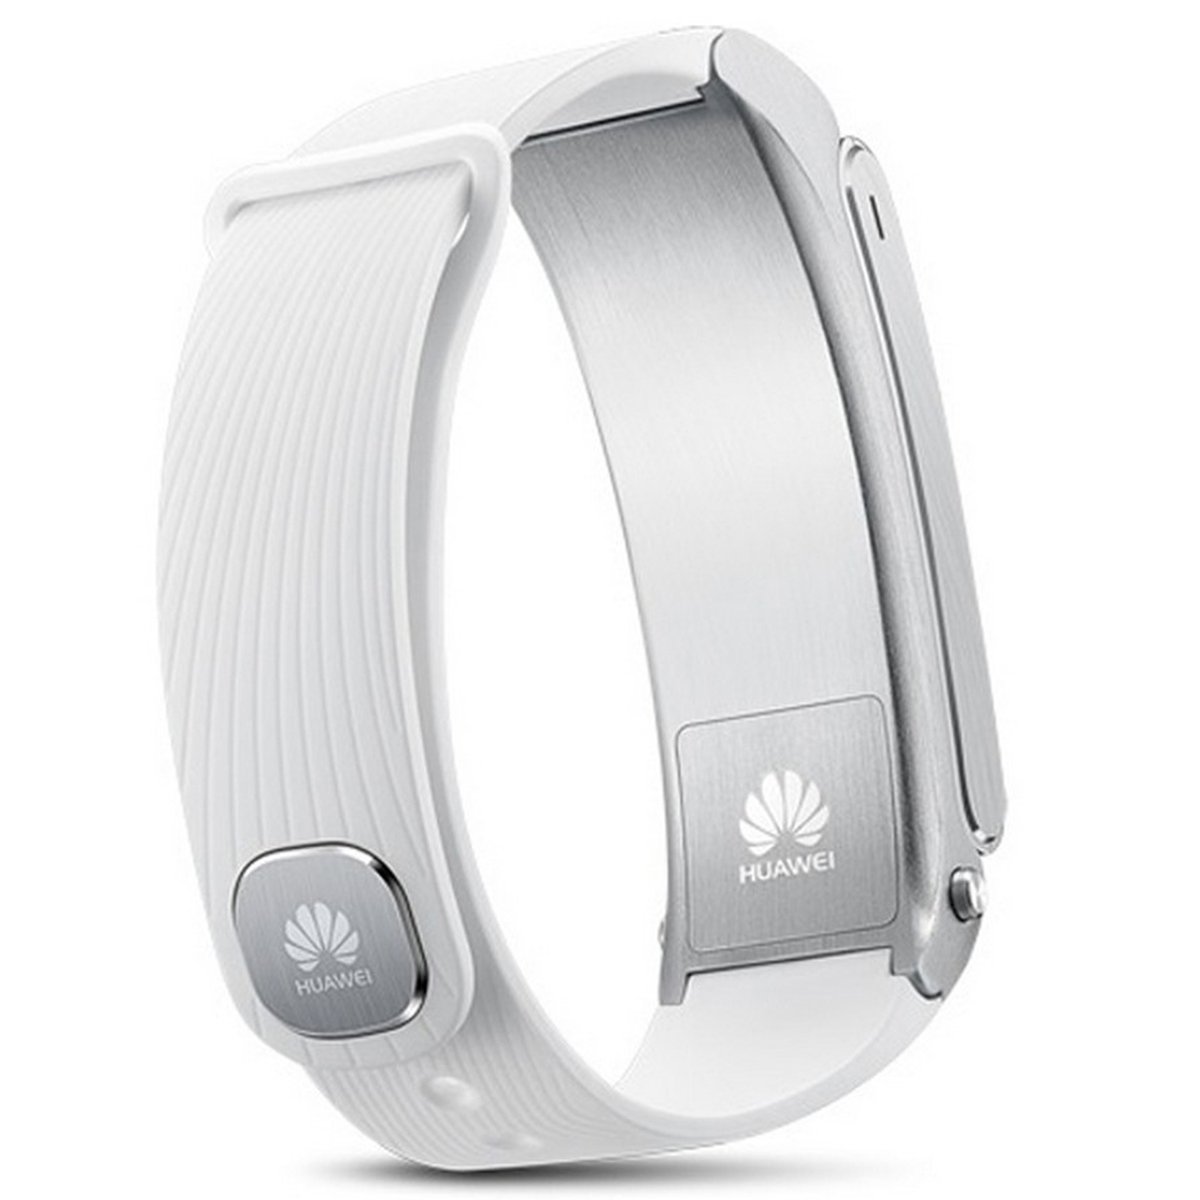 Huawei Smart Talk Band B2 White